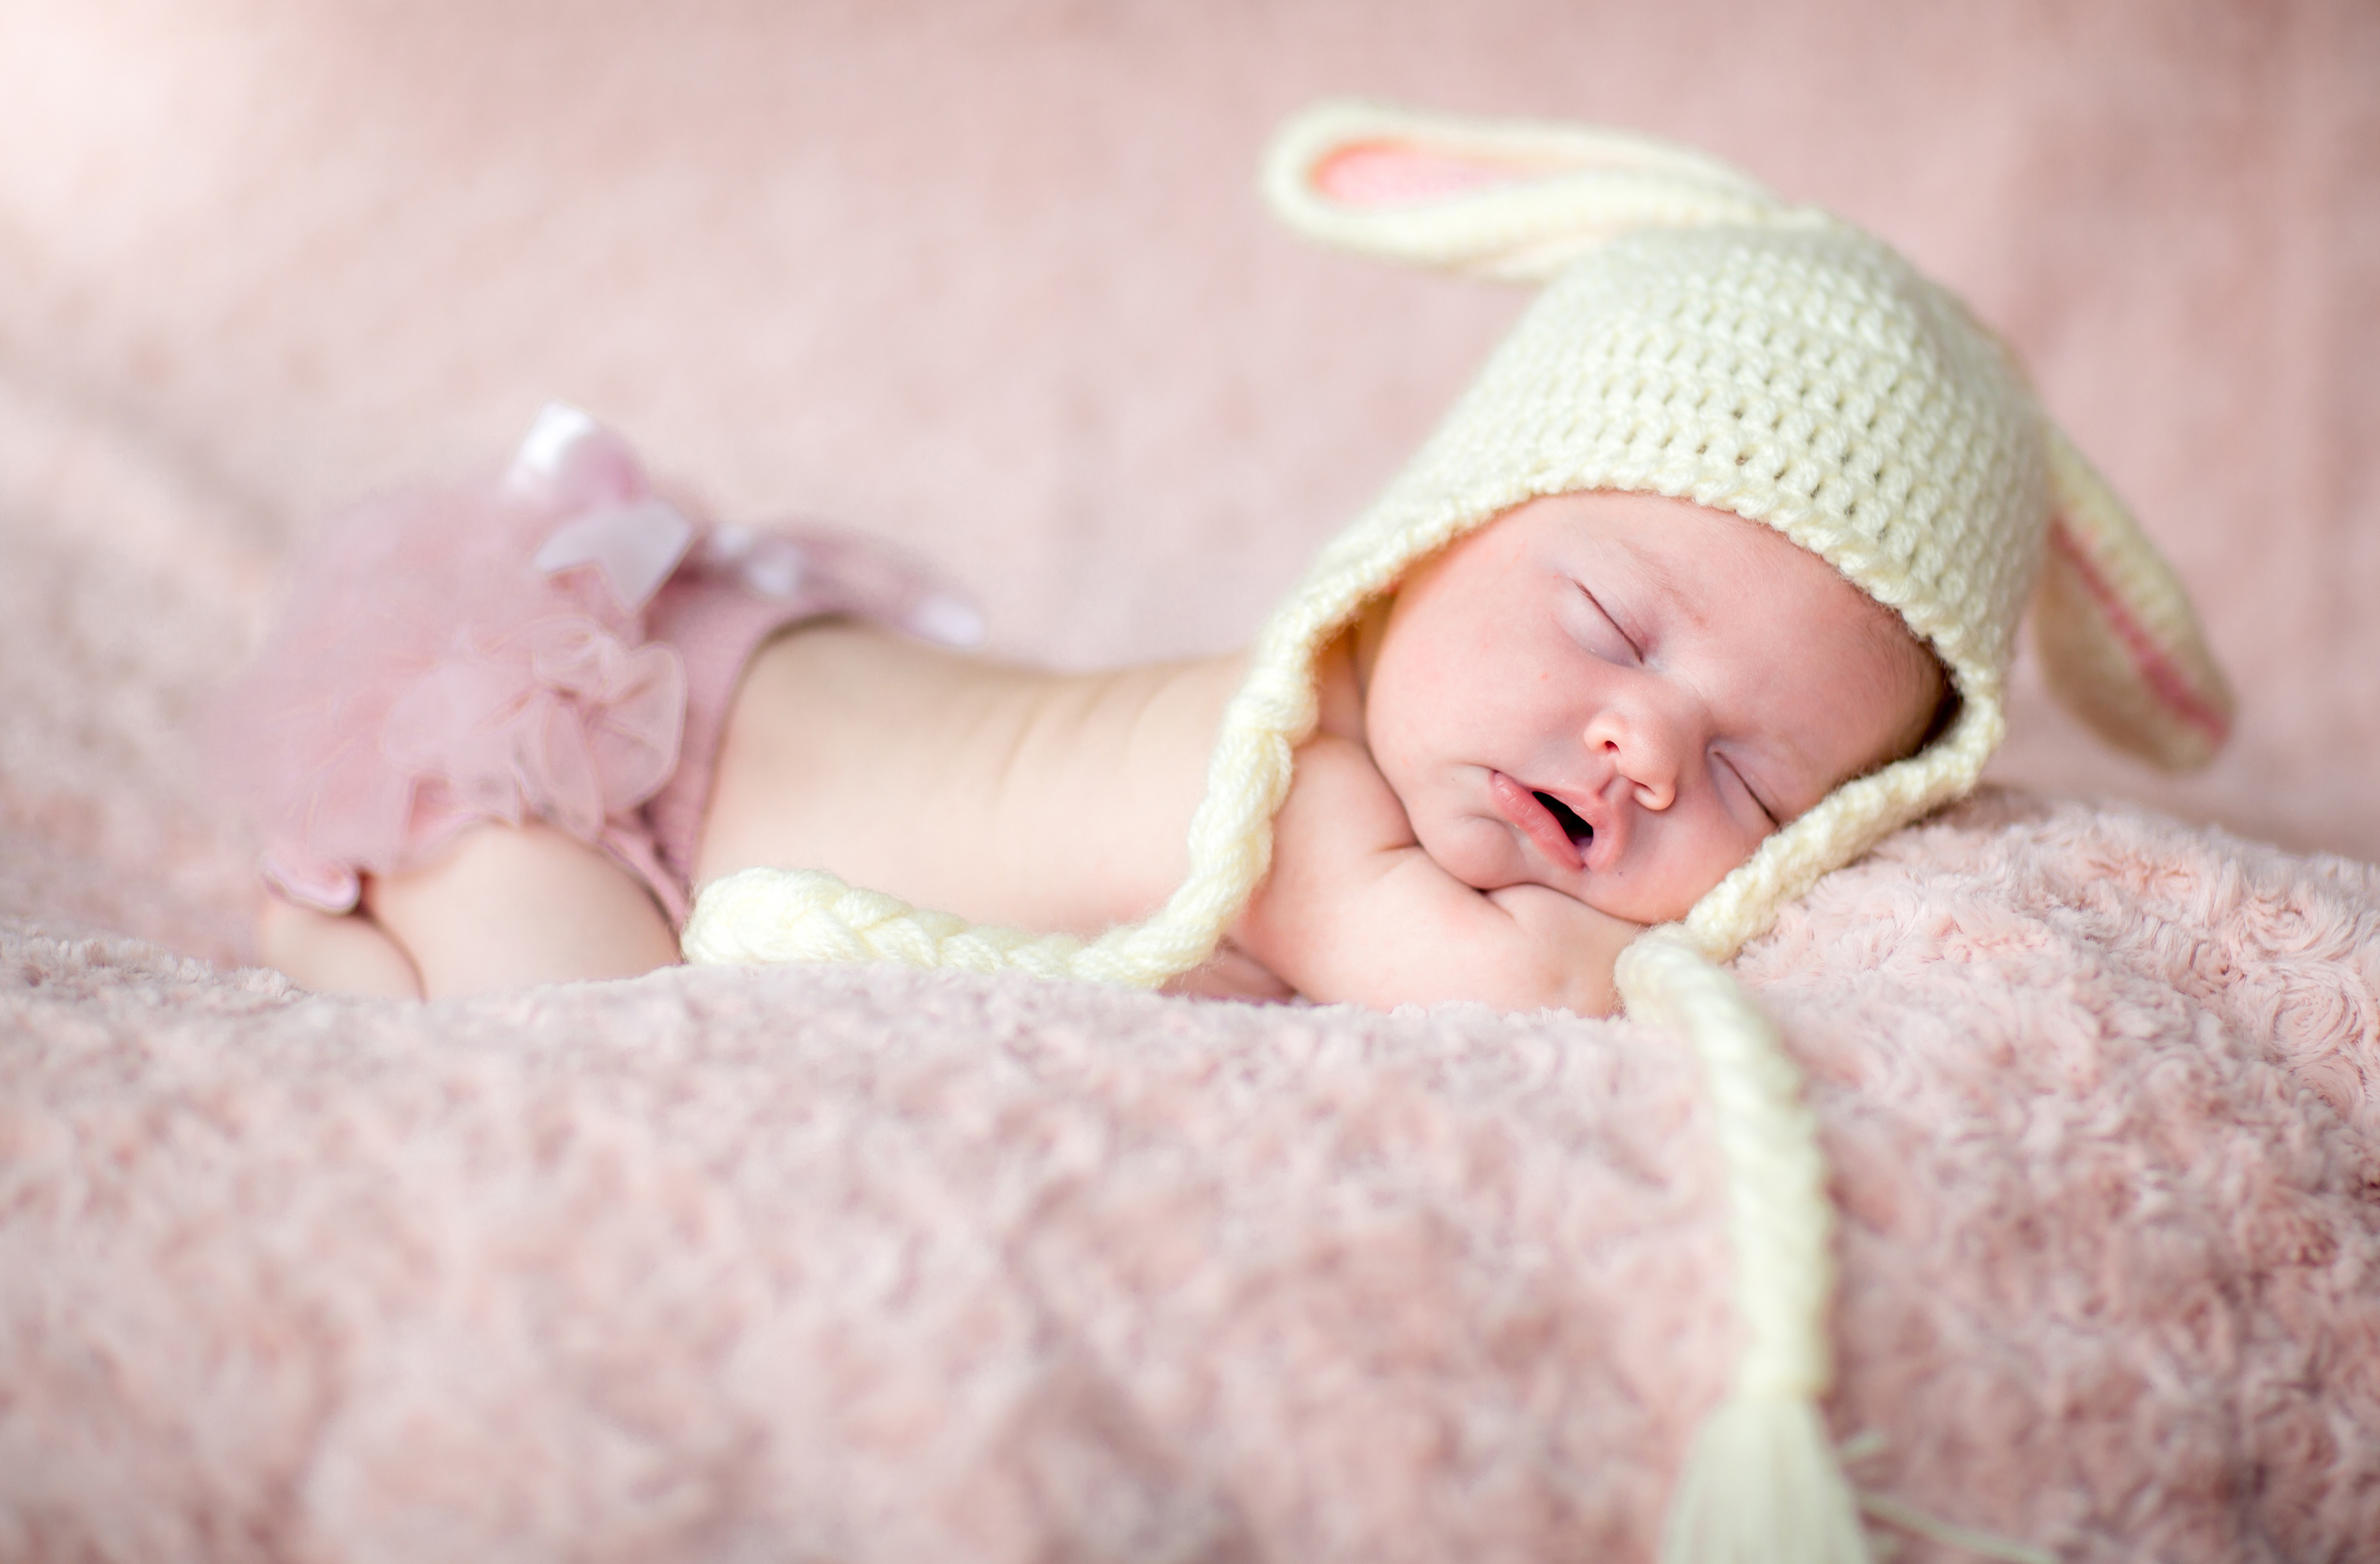 cute newborn baby girl sleeping picture on pink carpet